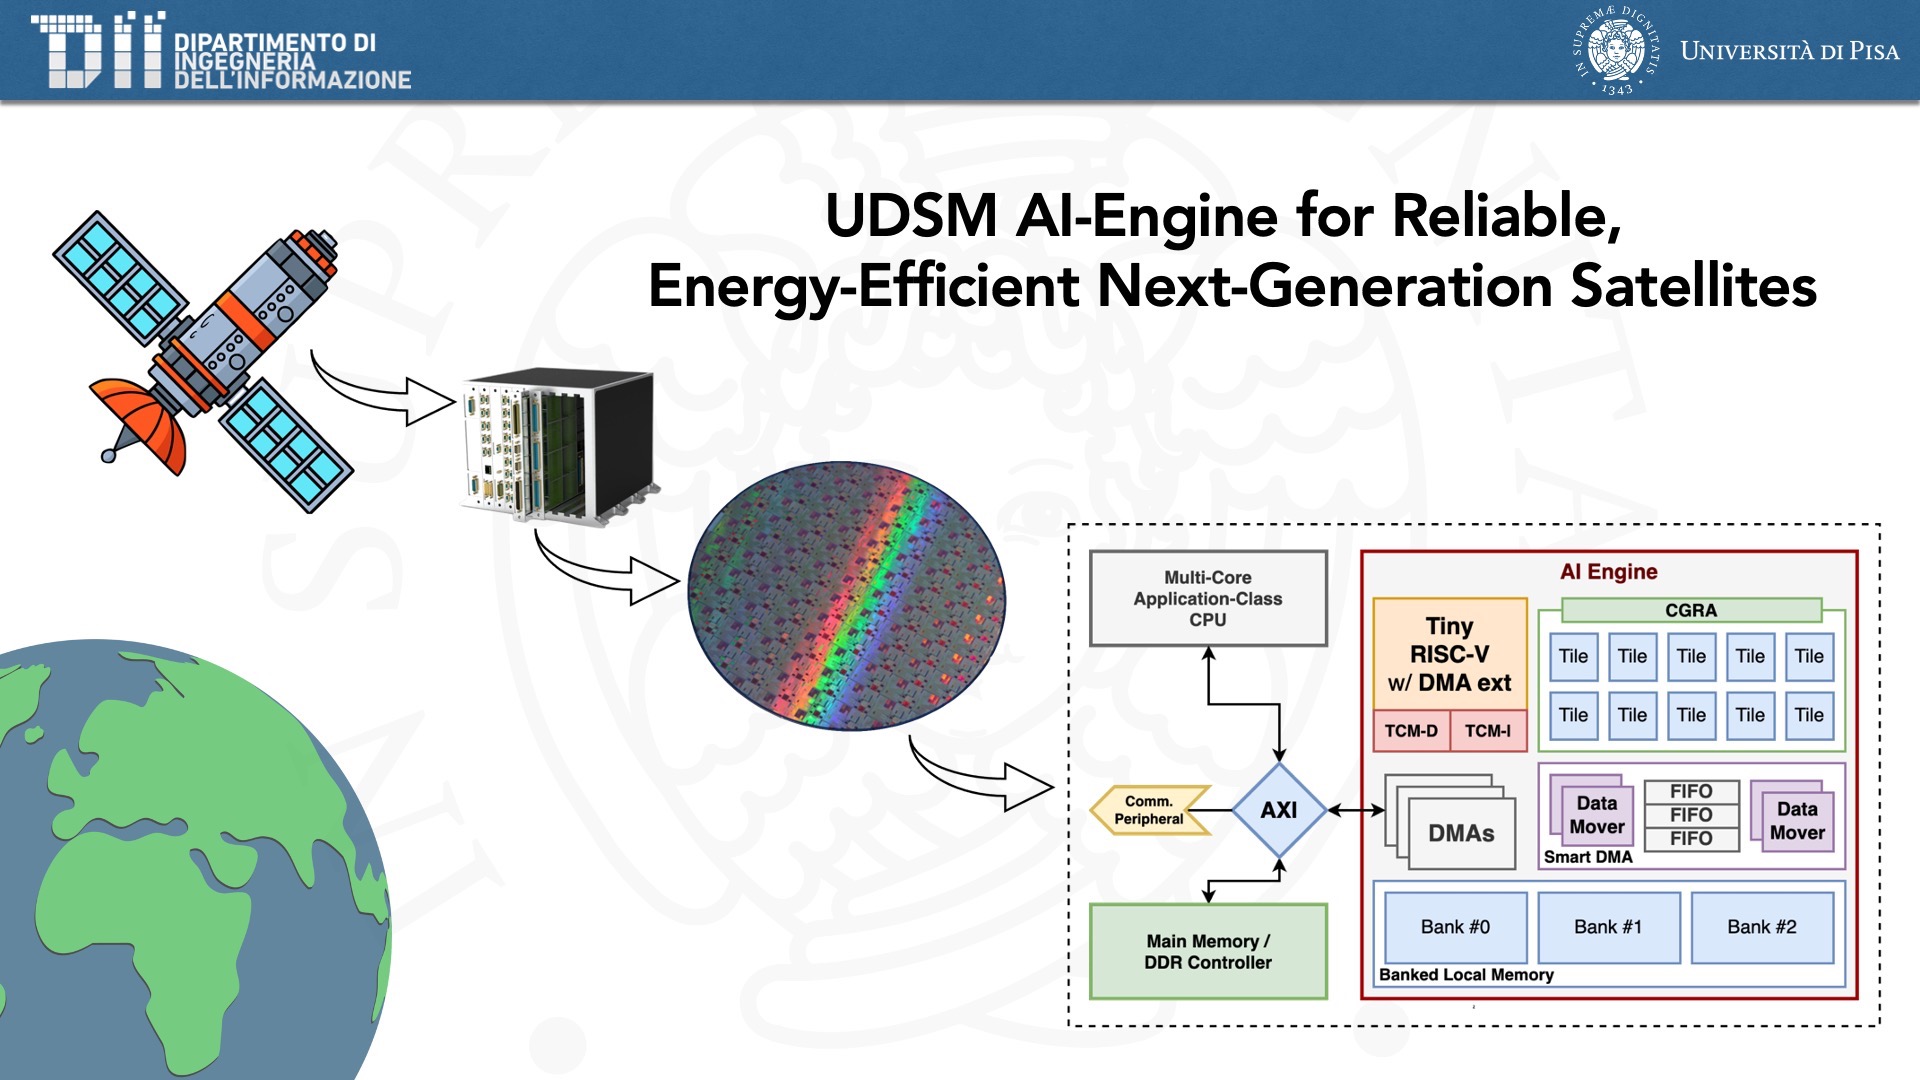 UDSM AI-Engine for Reliable, Energy-Efficient Next-Generation Satellites